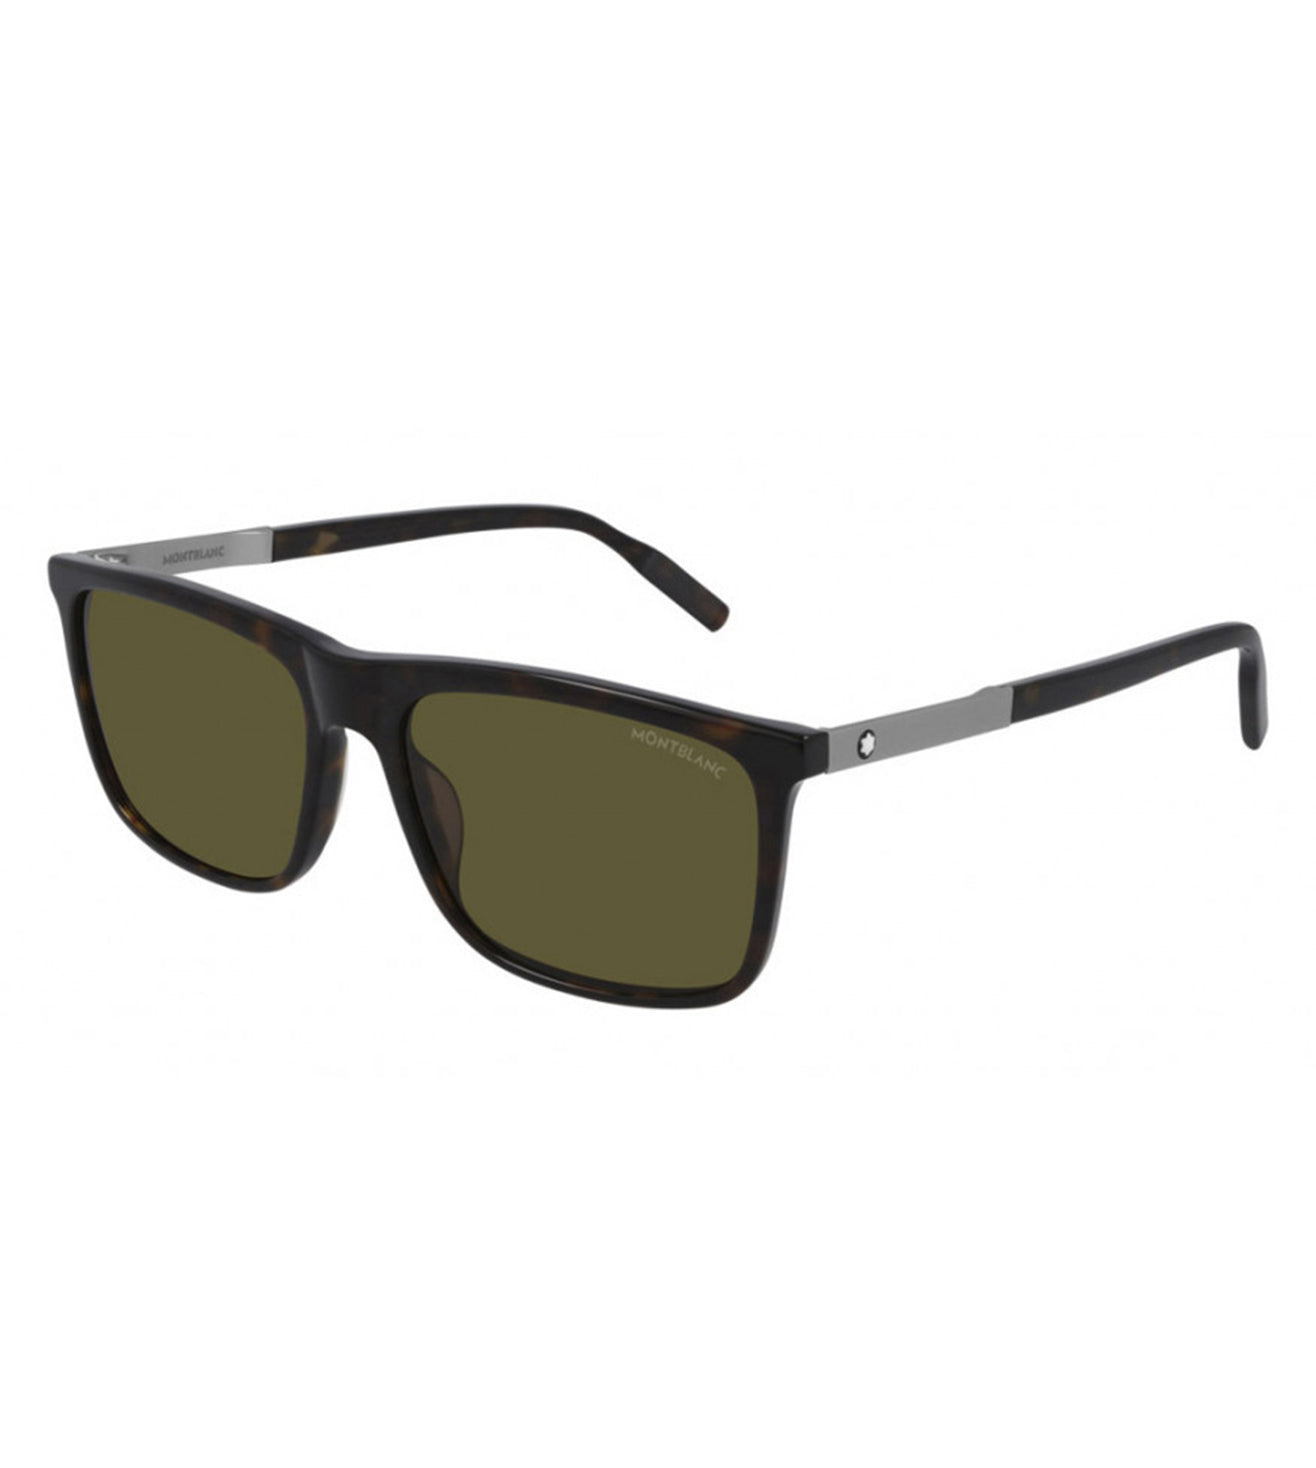 Montblanc Men's Brown Rectangular Sunglasses